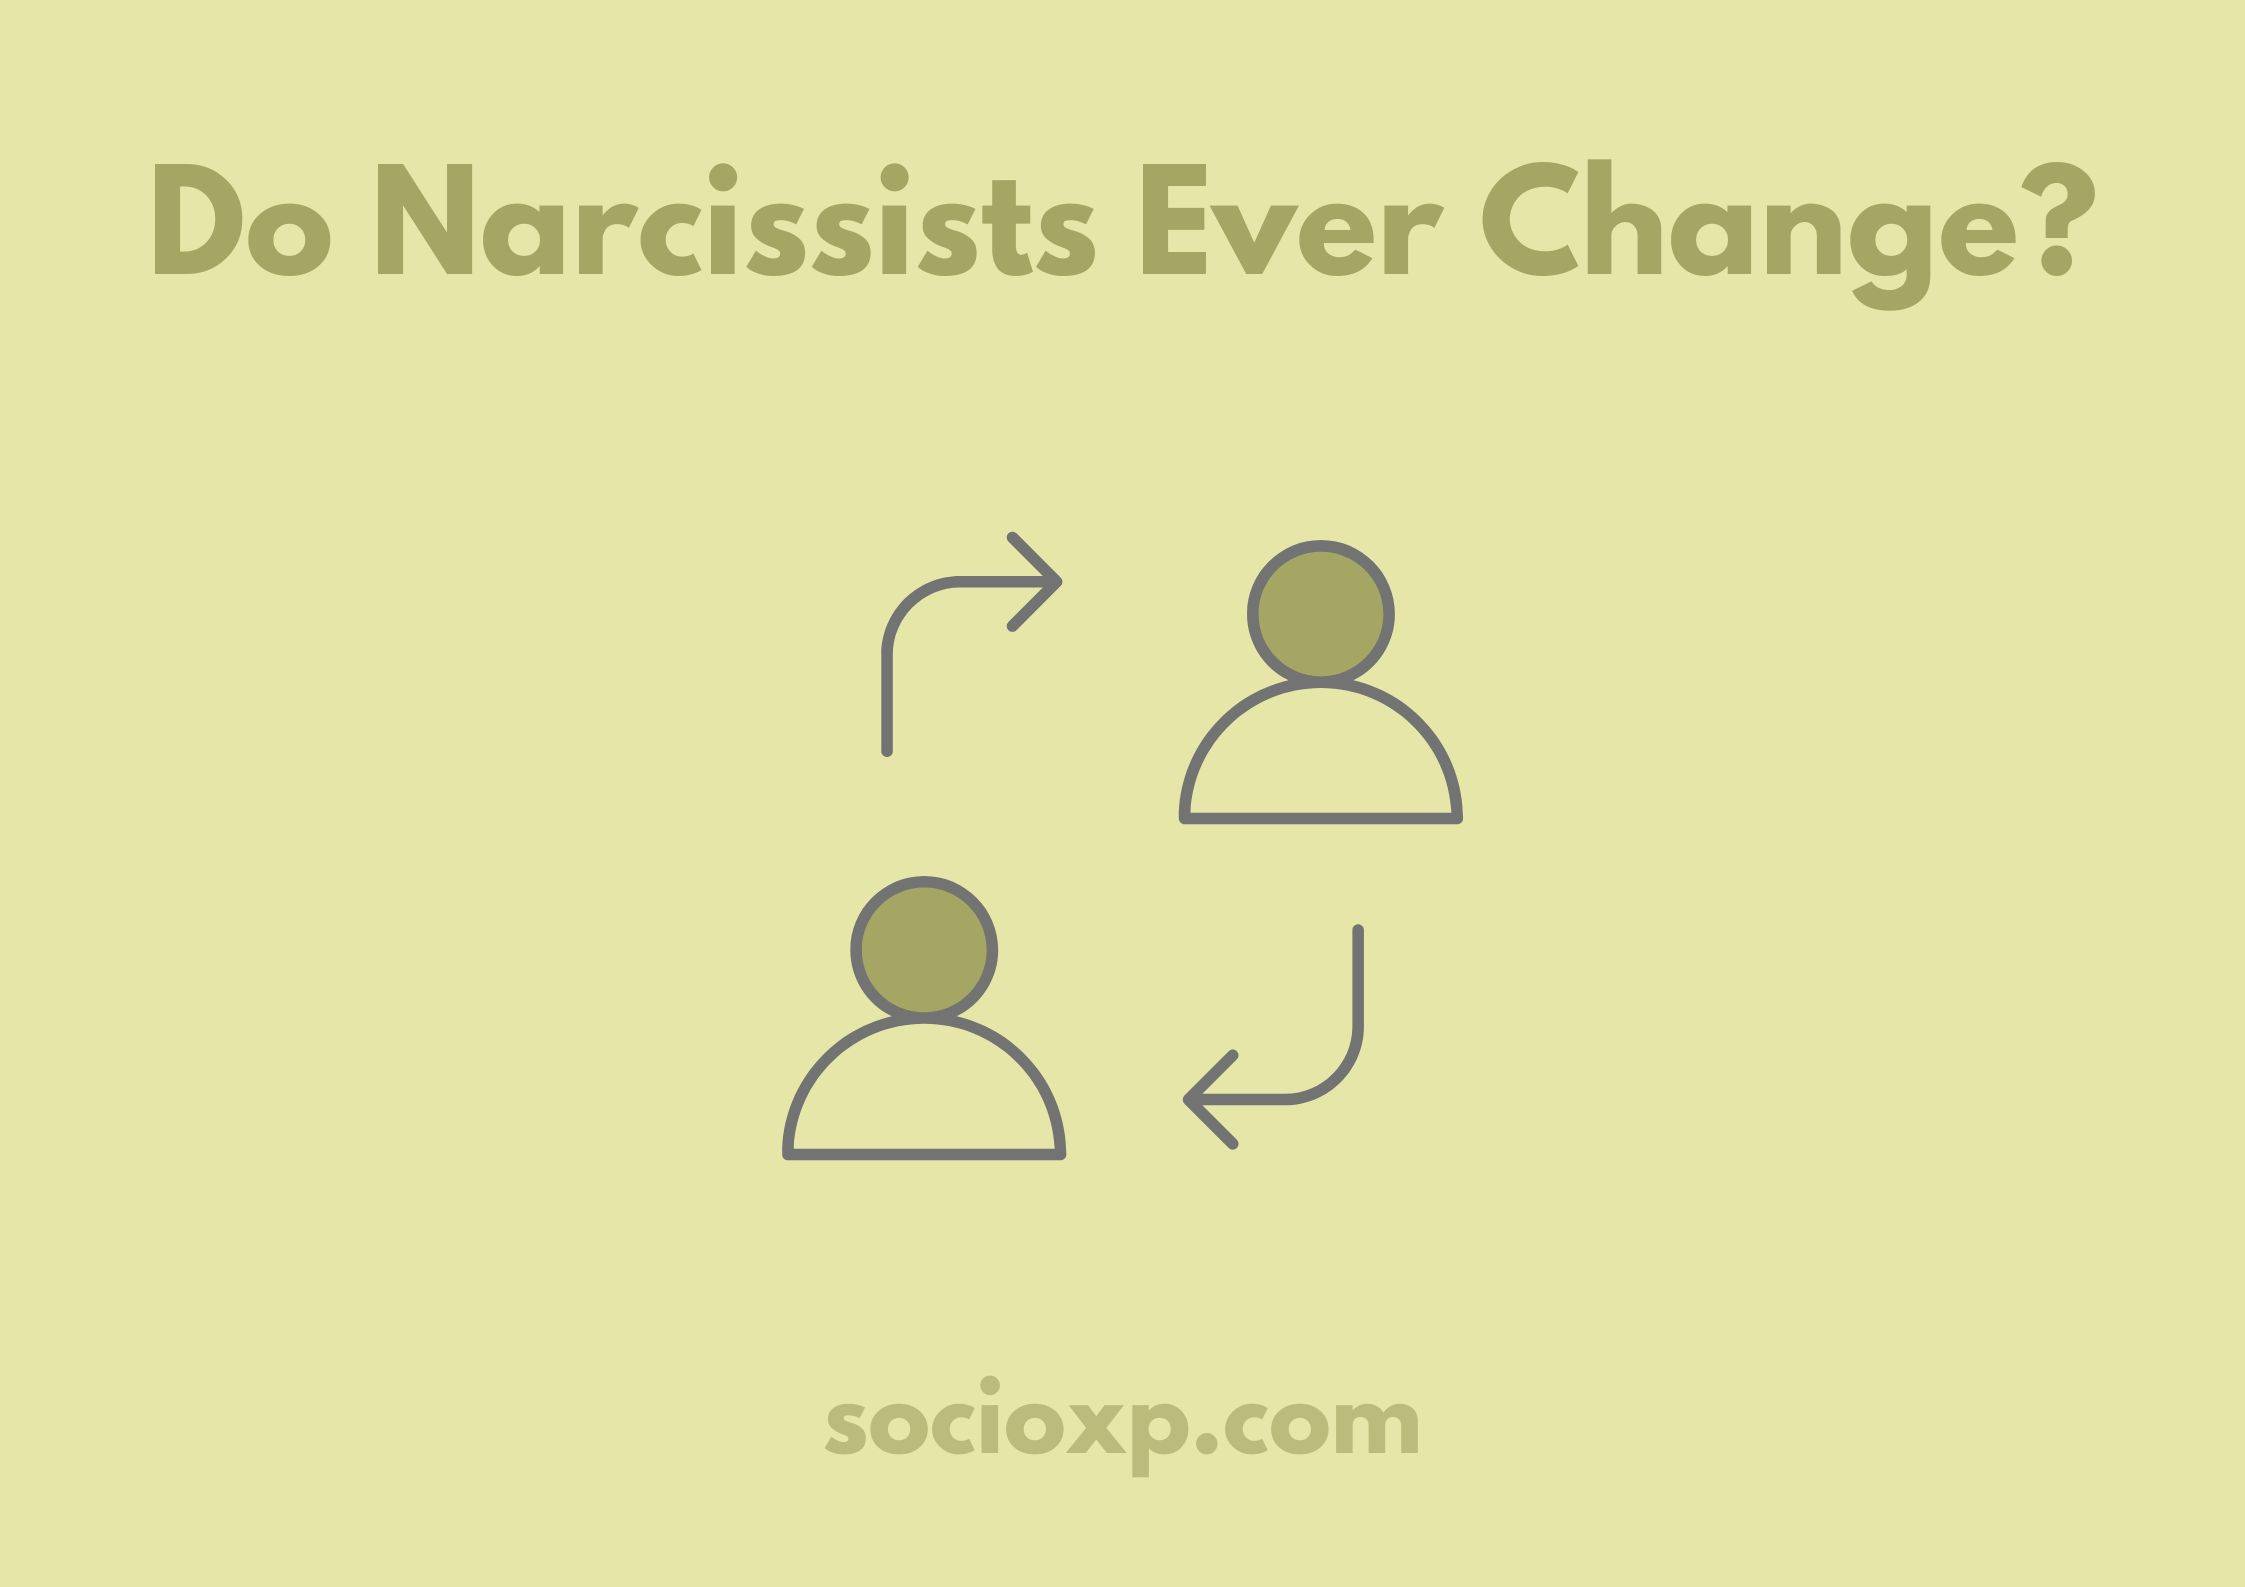 Do Narcissists Ever Change?